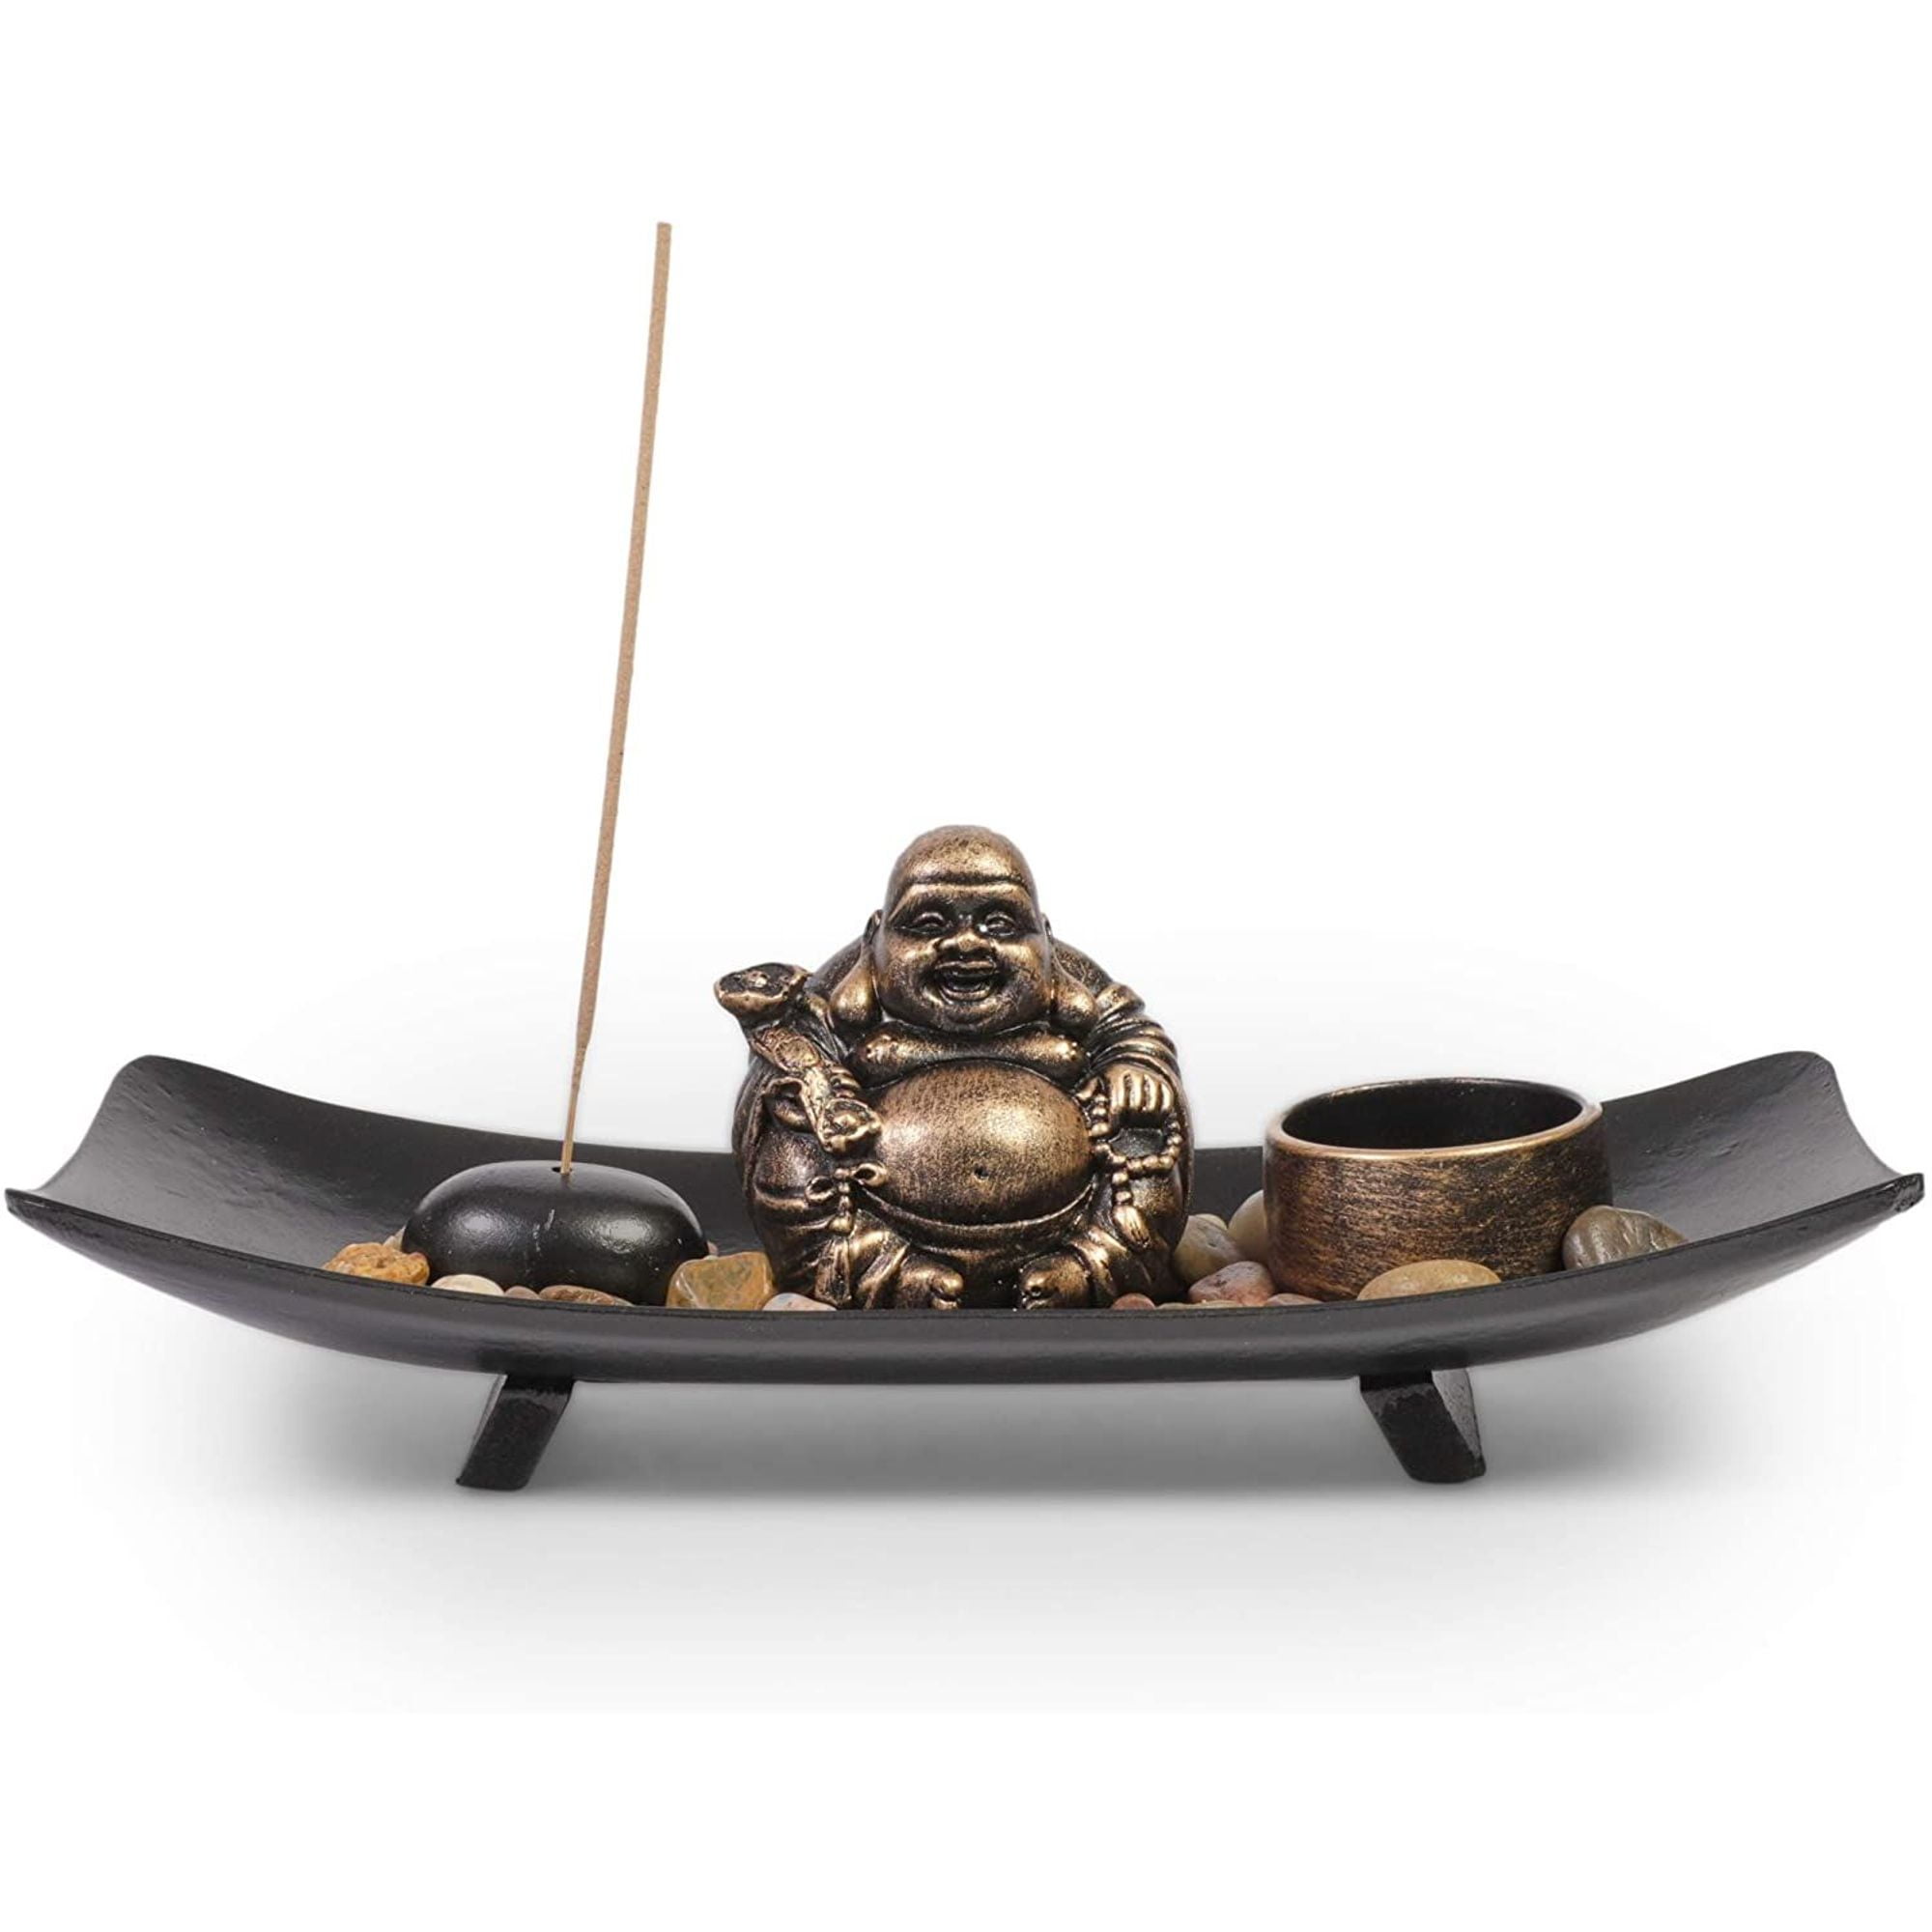 Sitting Laughing Buddha Statue Figurine Tealight for Home Garden Decor Feng Shui Gift - Black ...